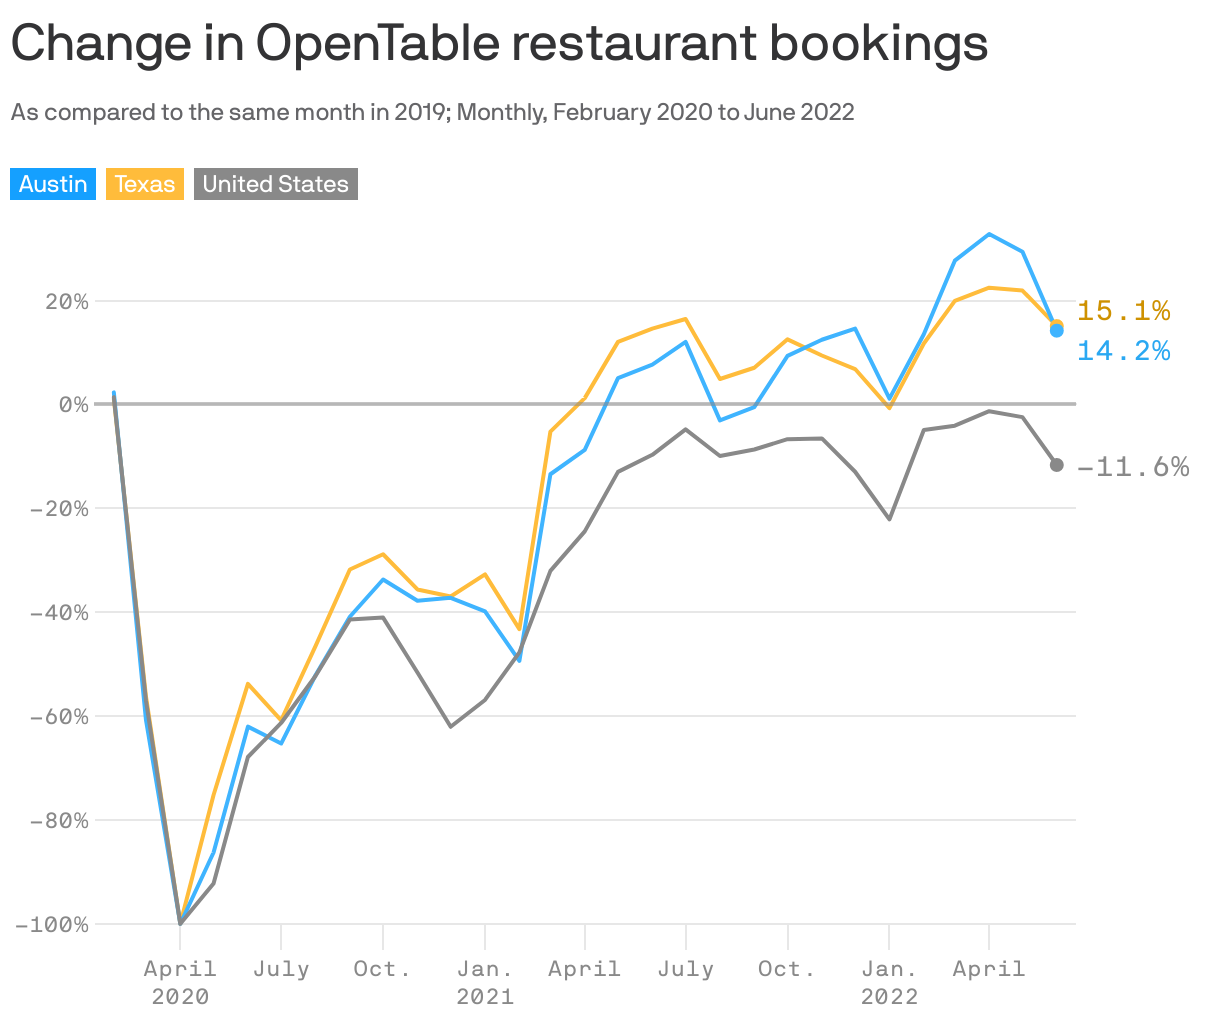 Change in OpenTable restaurant bookings